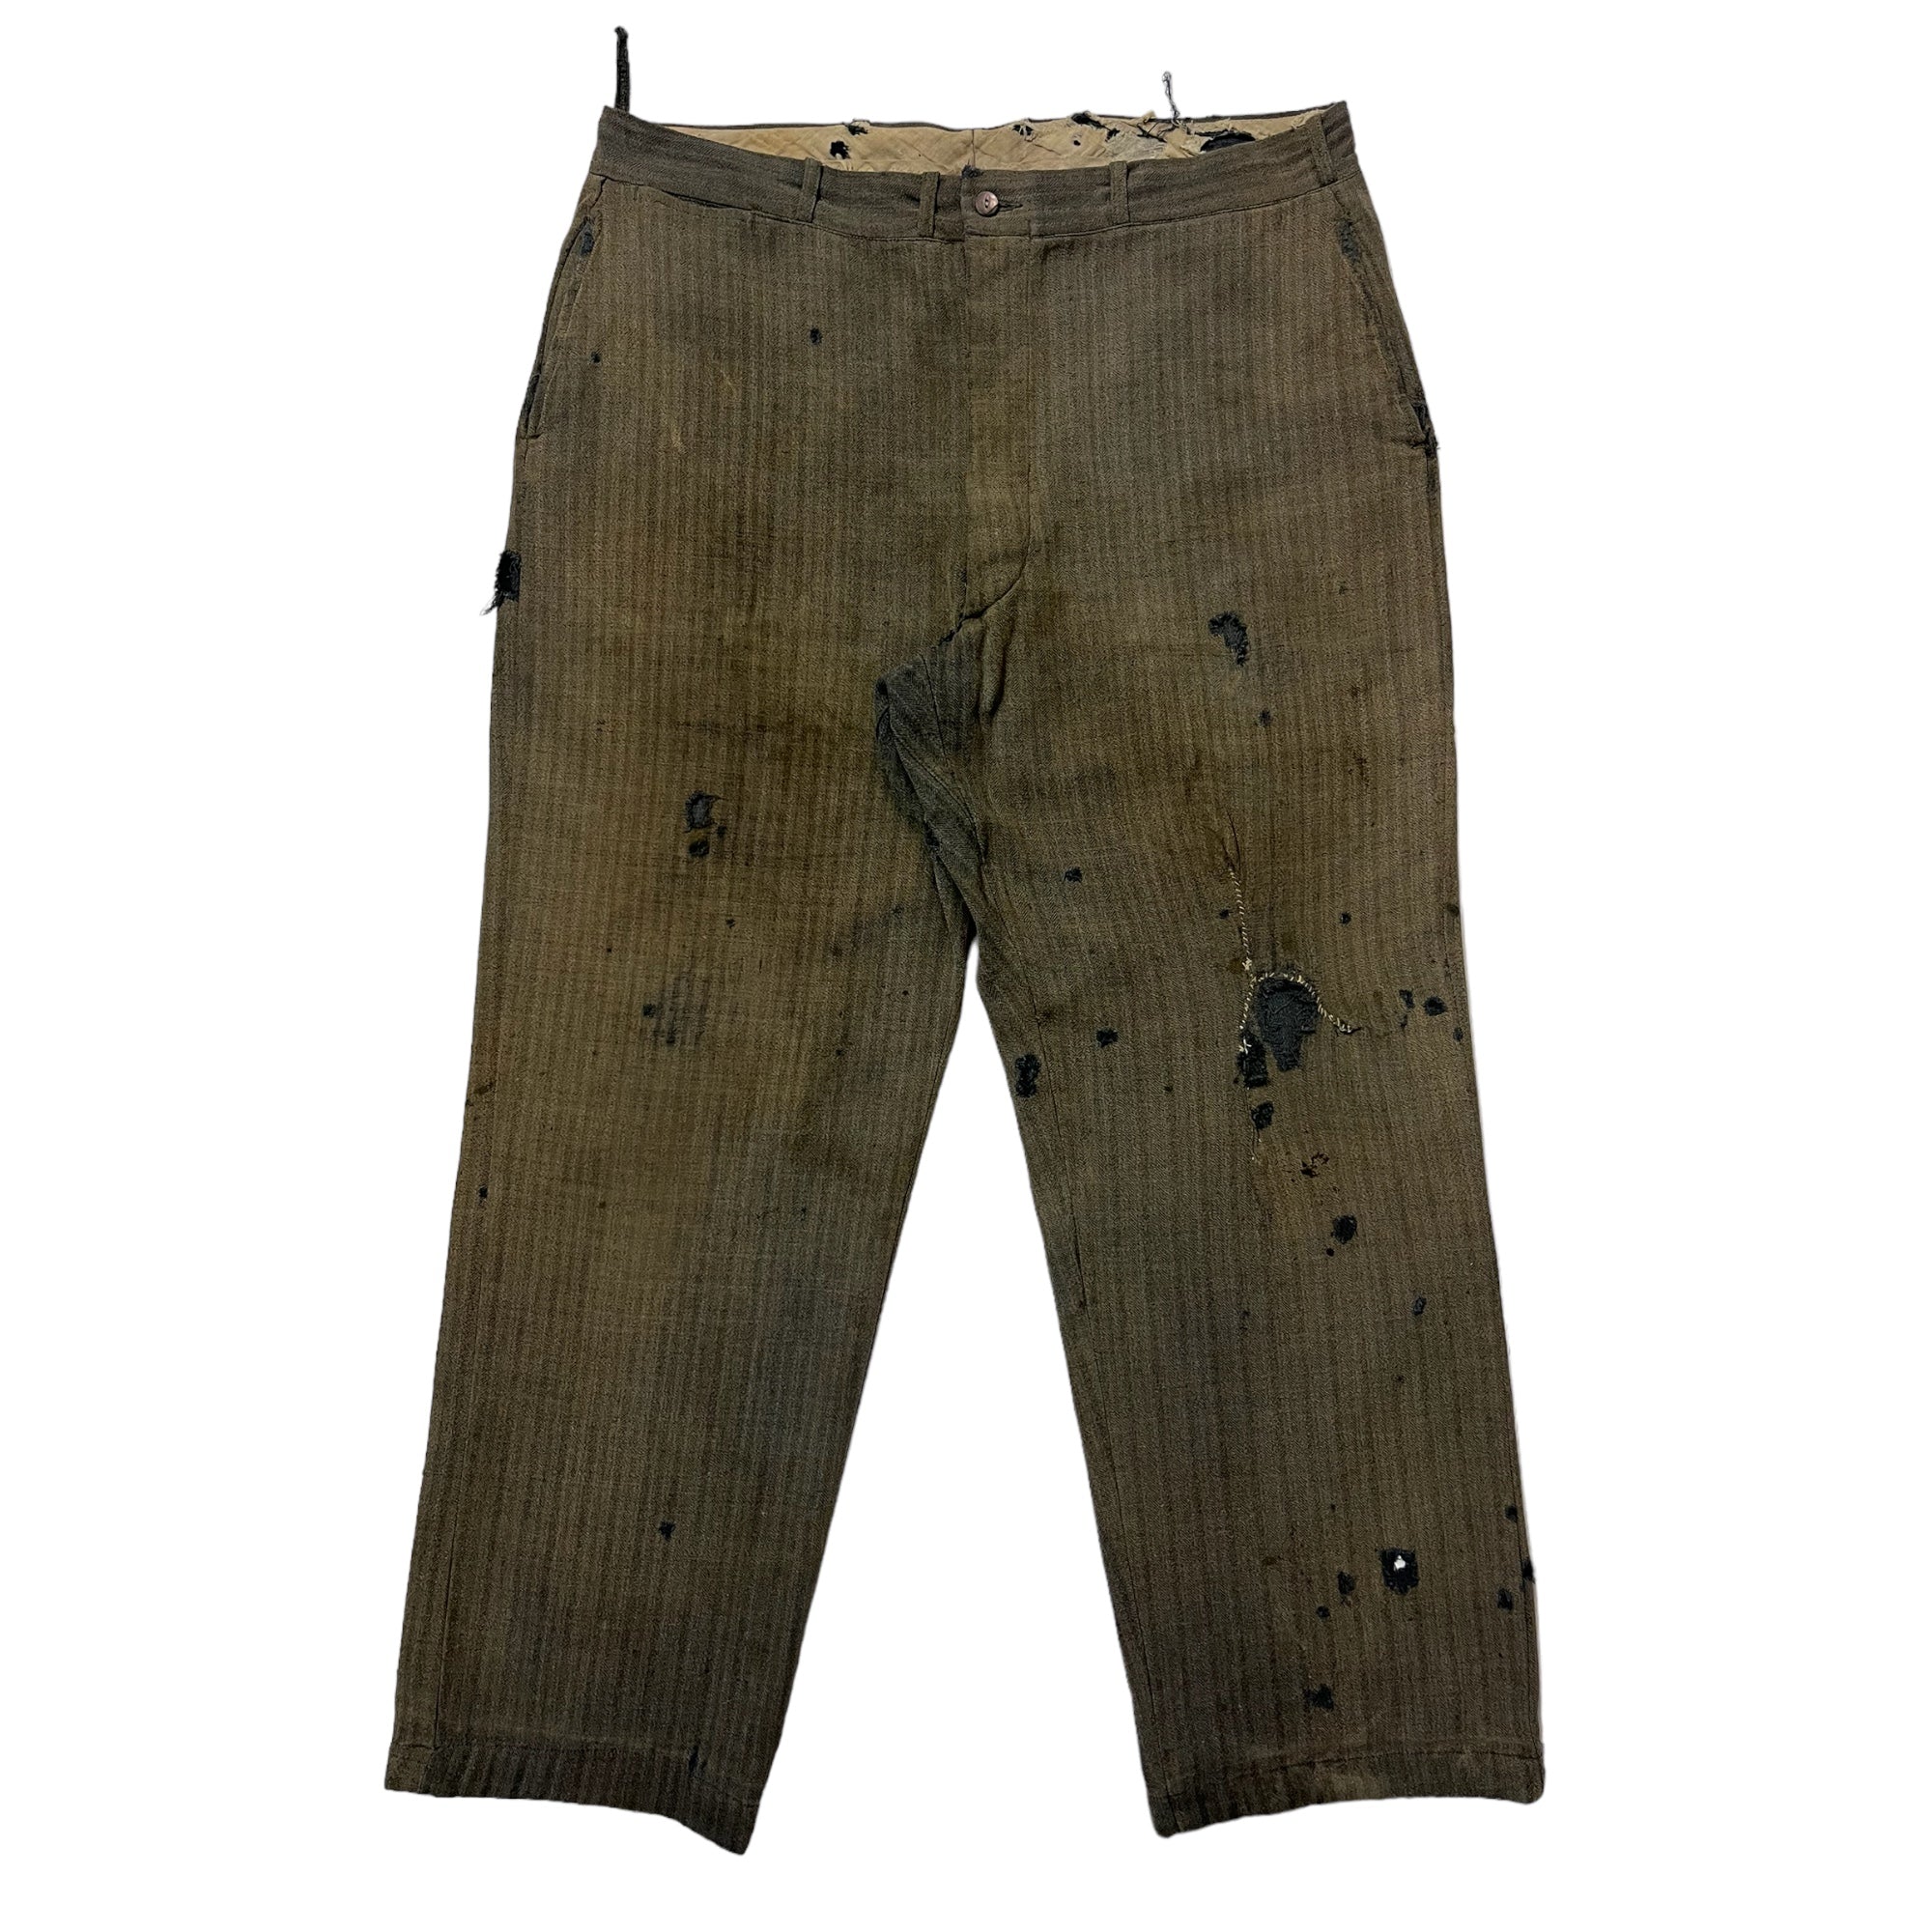 1940s/50s Distressed Striped Twill Work Pants - Faded Olive Drab - 35x28